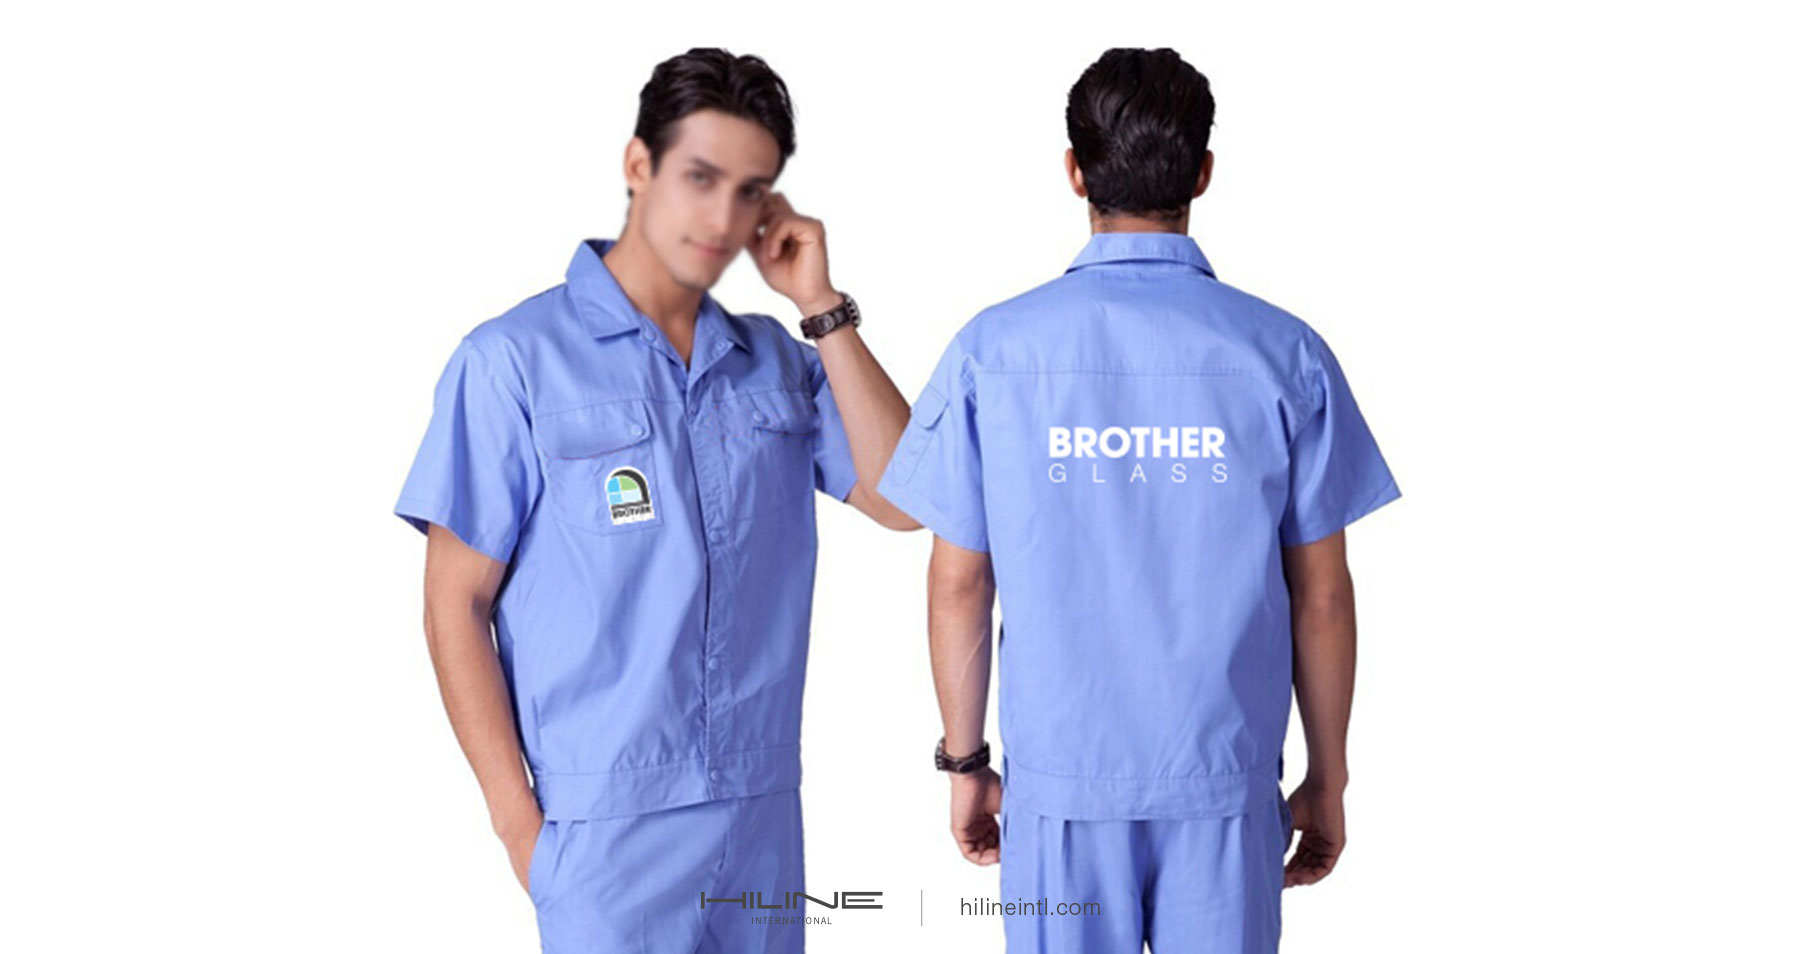 Brother Glass Brand design by Mapleweb Man Wearing Uniform Displaying Logo